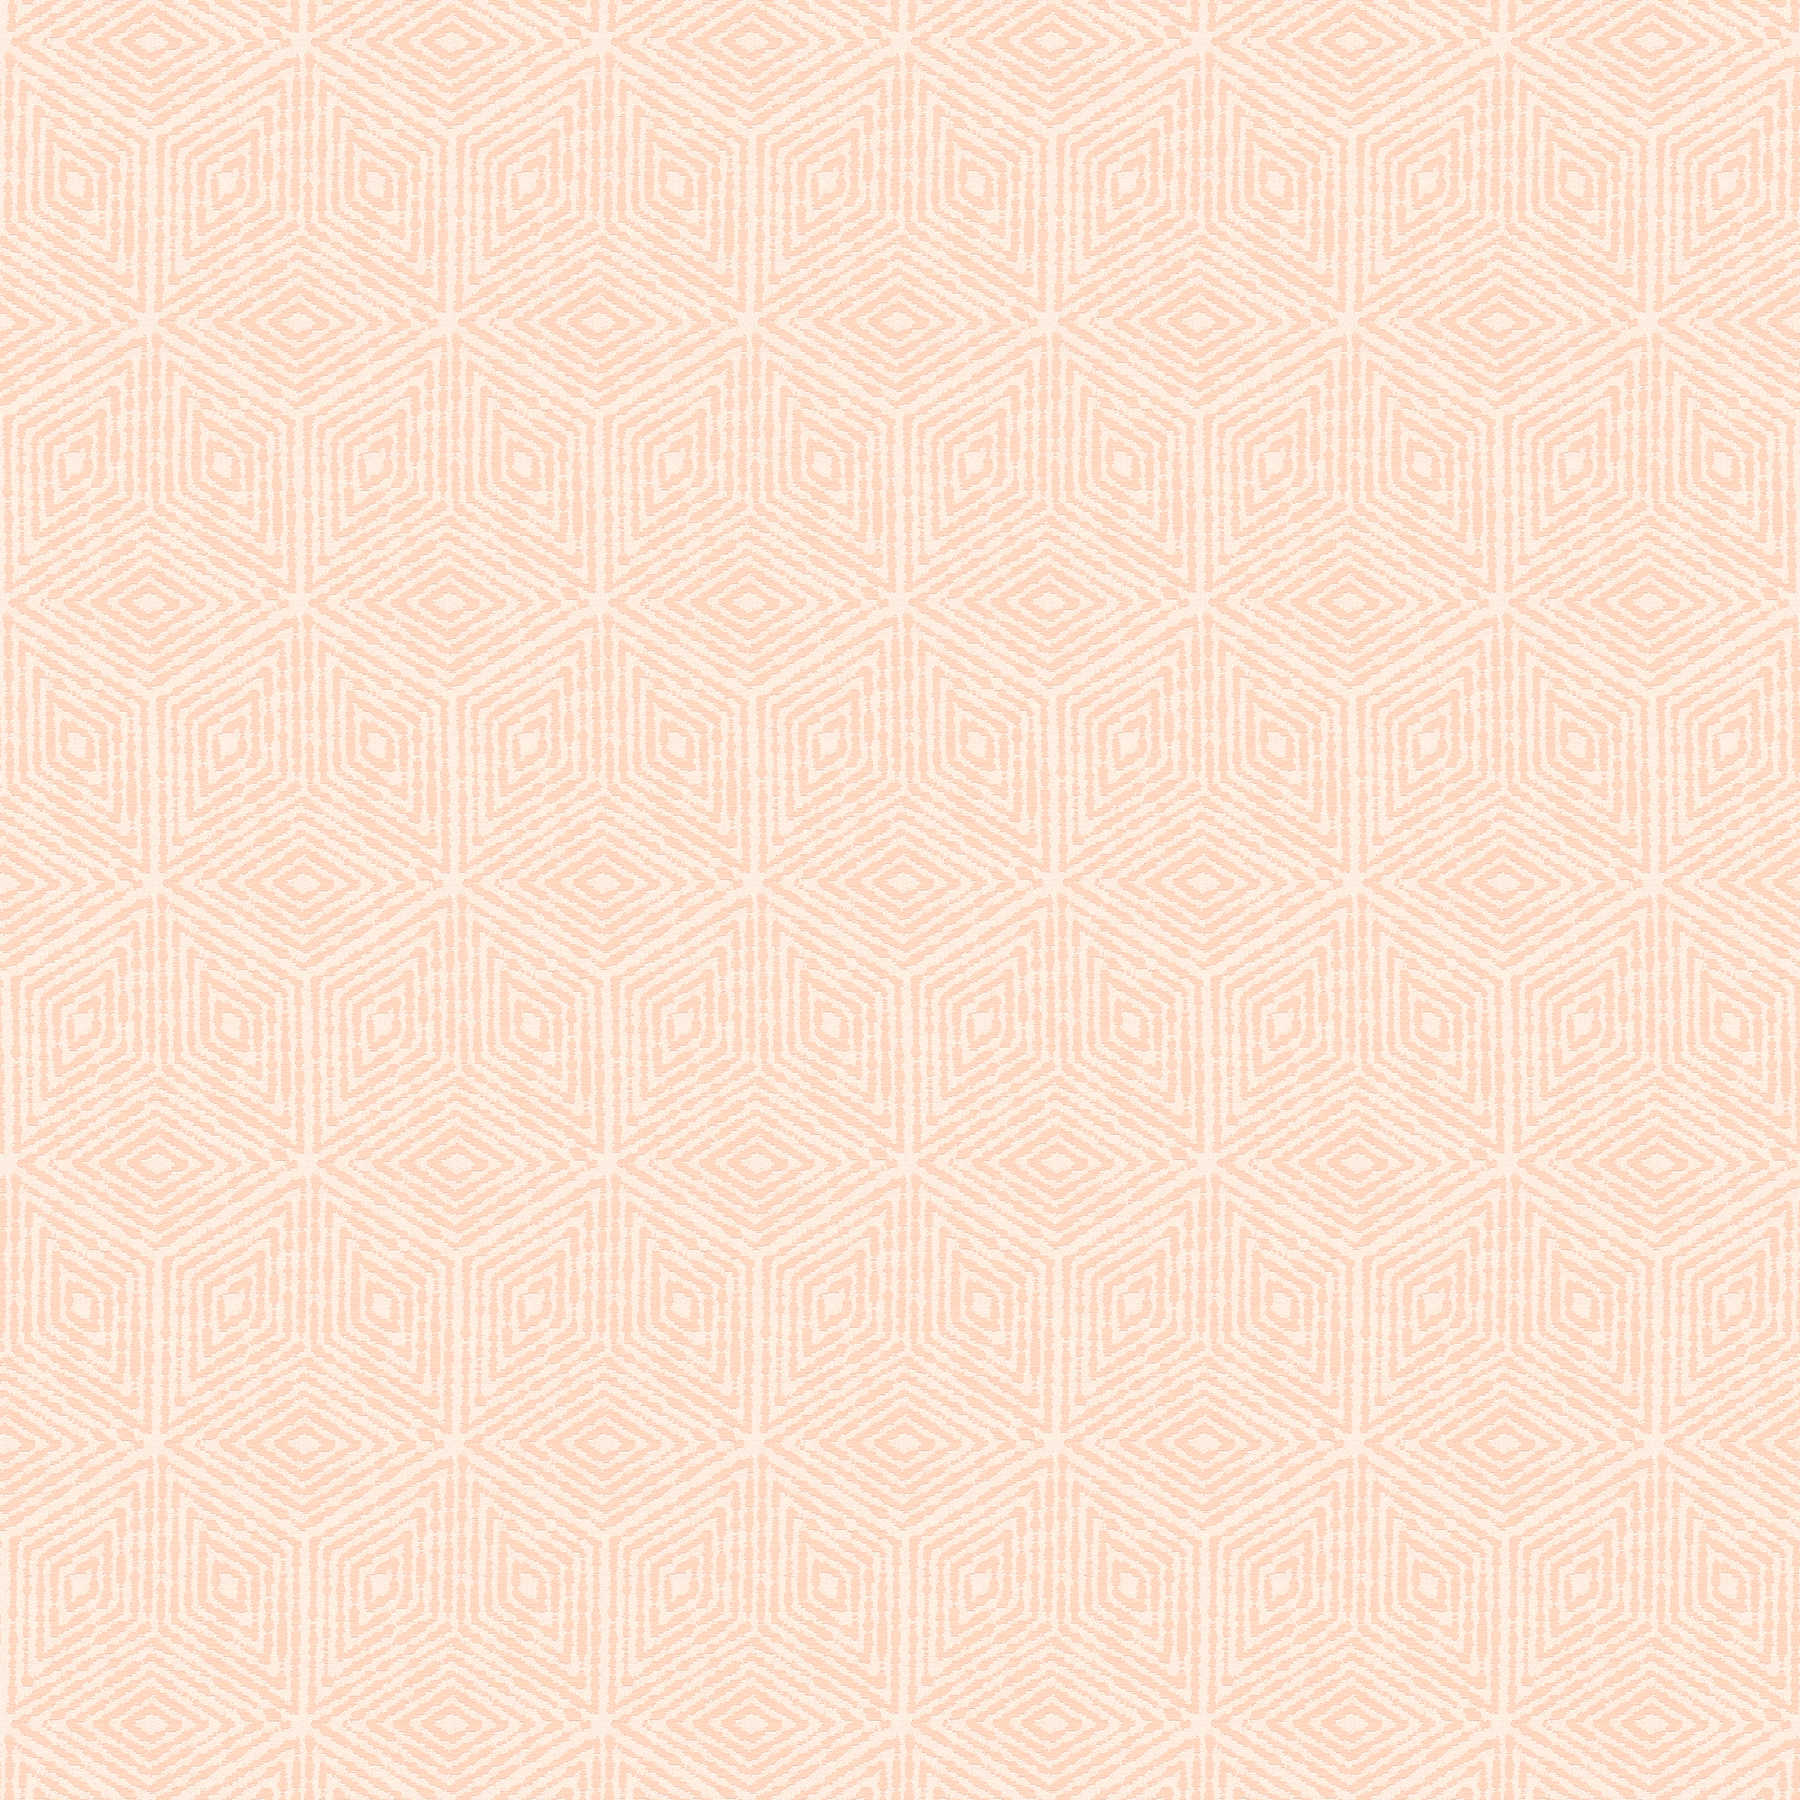 Graphic wallpaper geometric diamond & hexagon pattern - orange, pink
